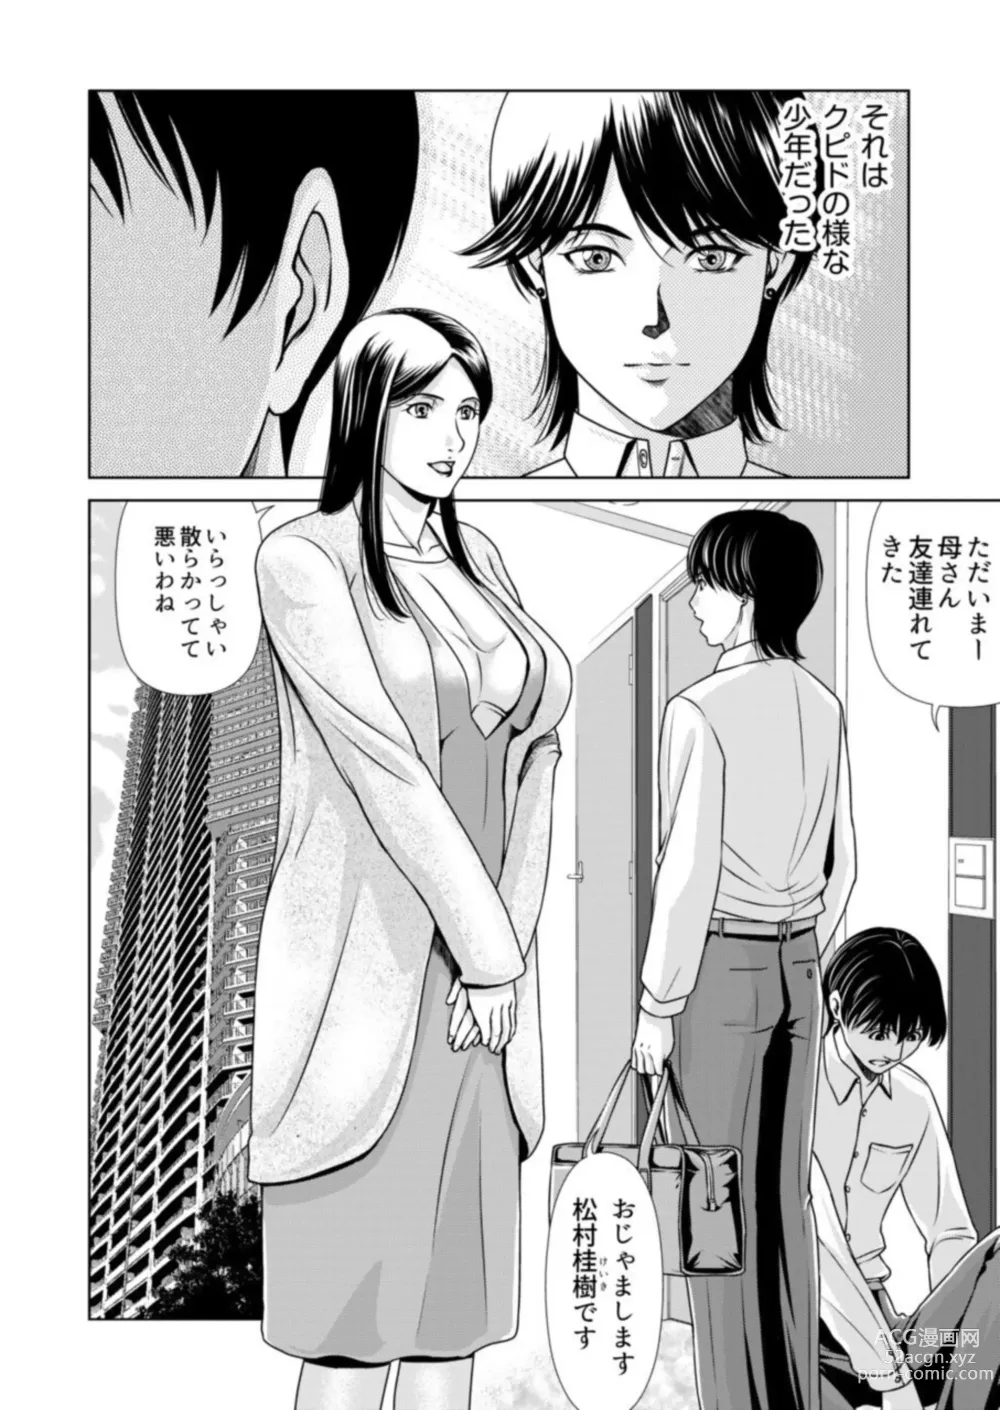 Page 3 of manga Bosei no Nukumori  1